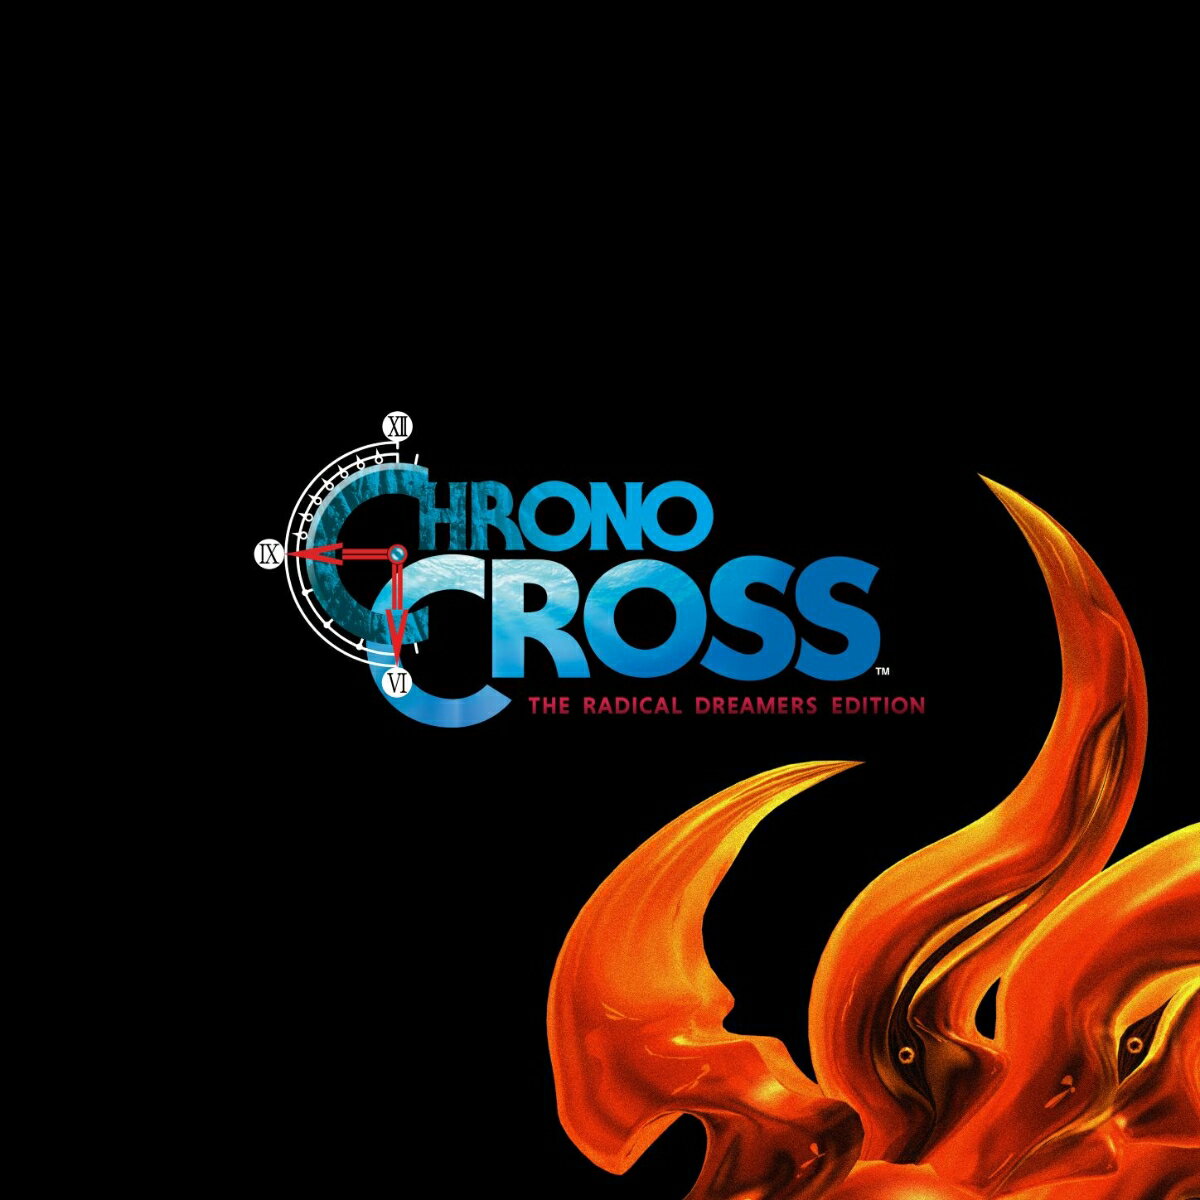 CHRONO CROSS: THE RADICAL DREAMERS EDITION Vinyl【アナログ盤】